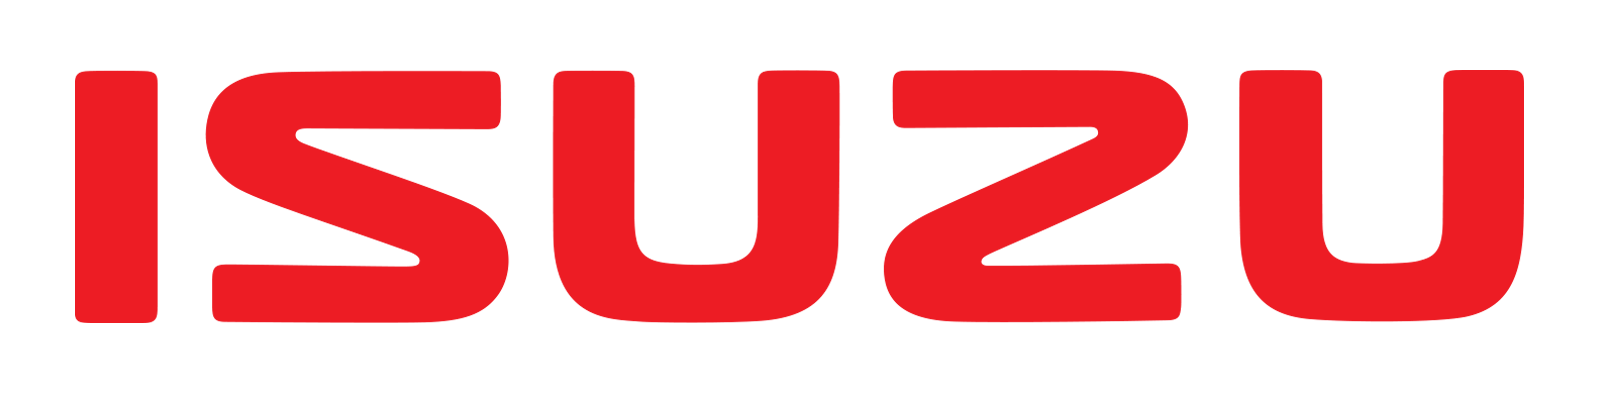 Isuzu logotipo website